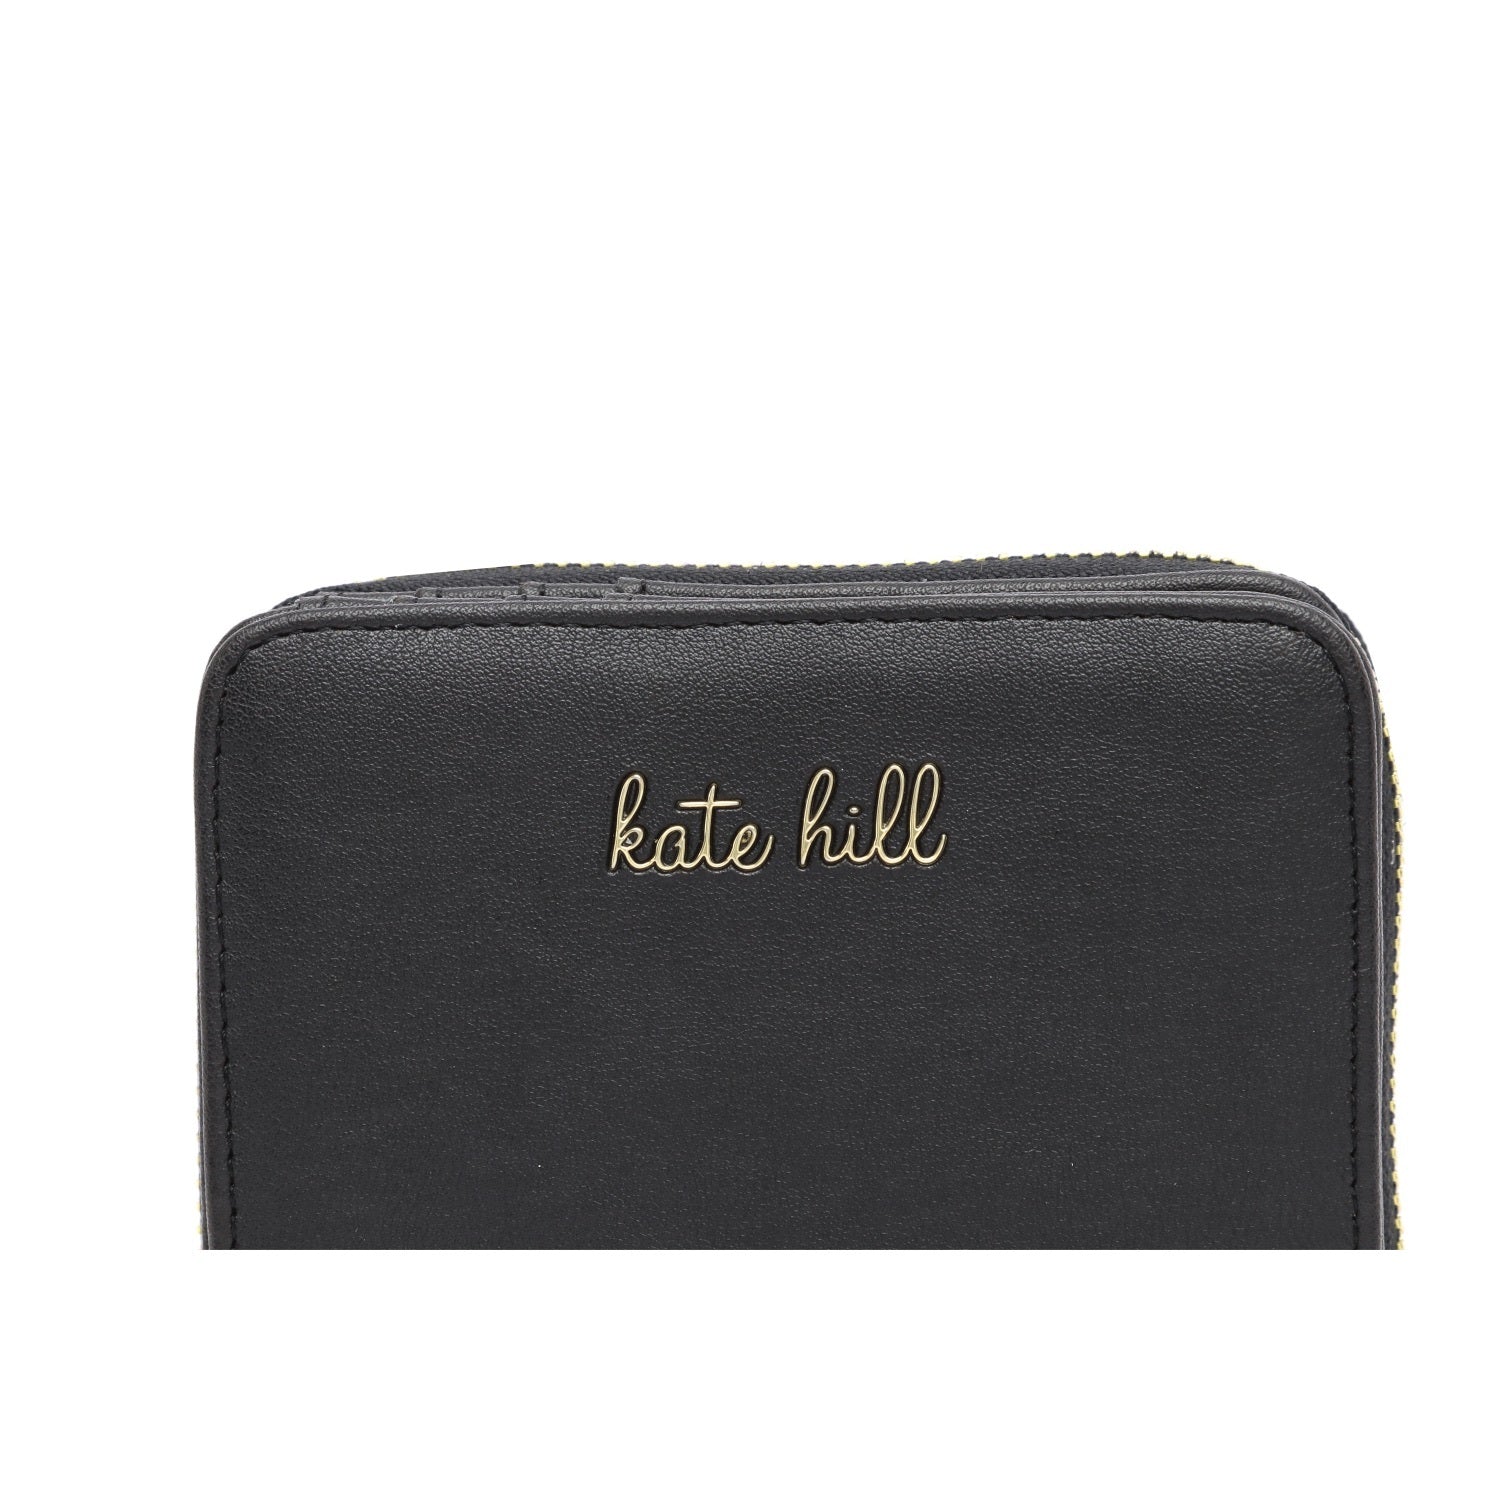 Kate Hill - Josie purse KH-22012 - Black-3